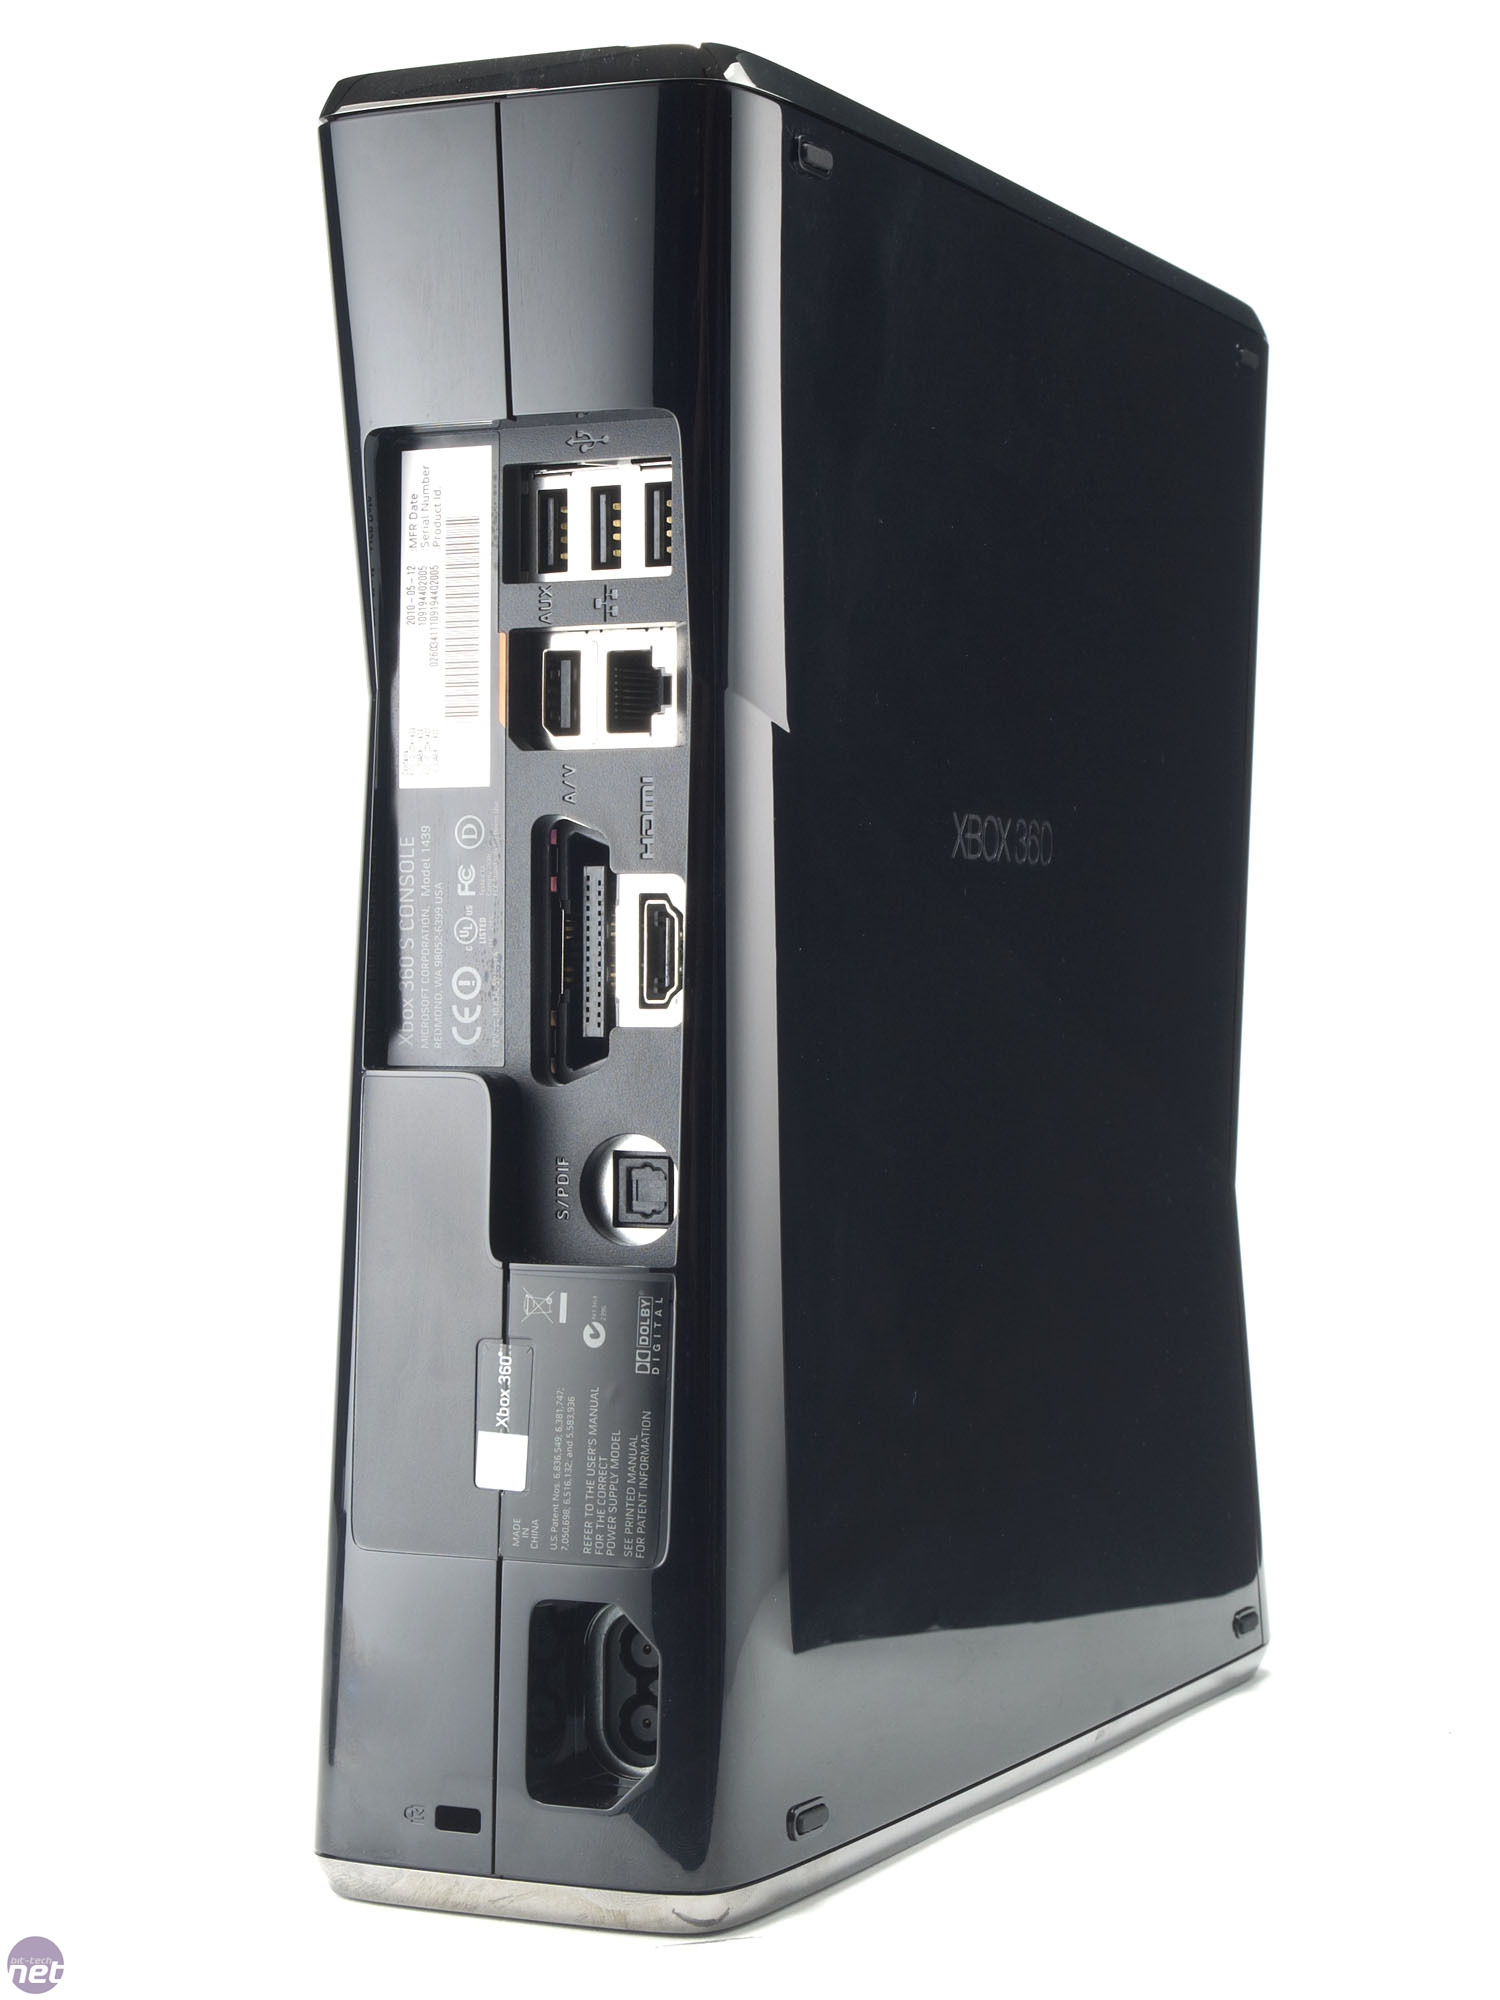 xbox 360 model 1439 hard drive